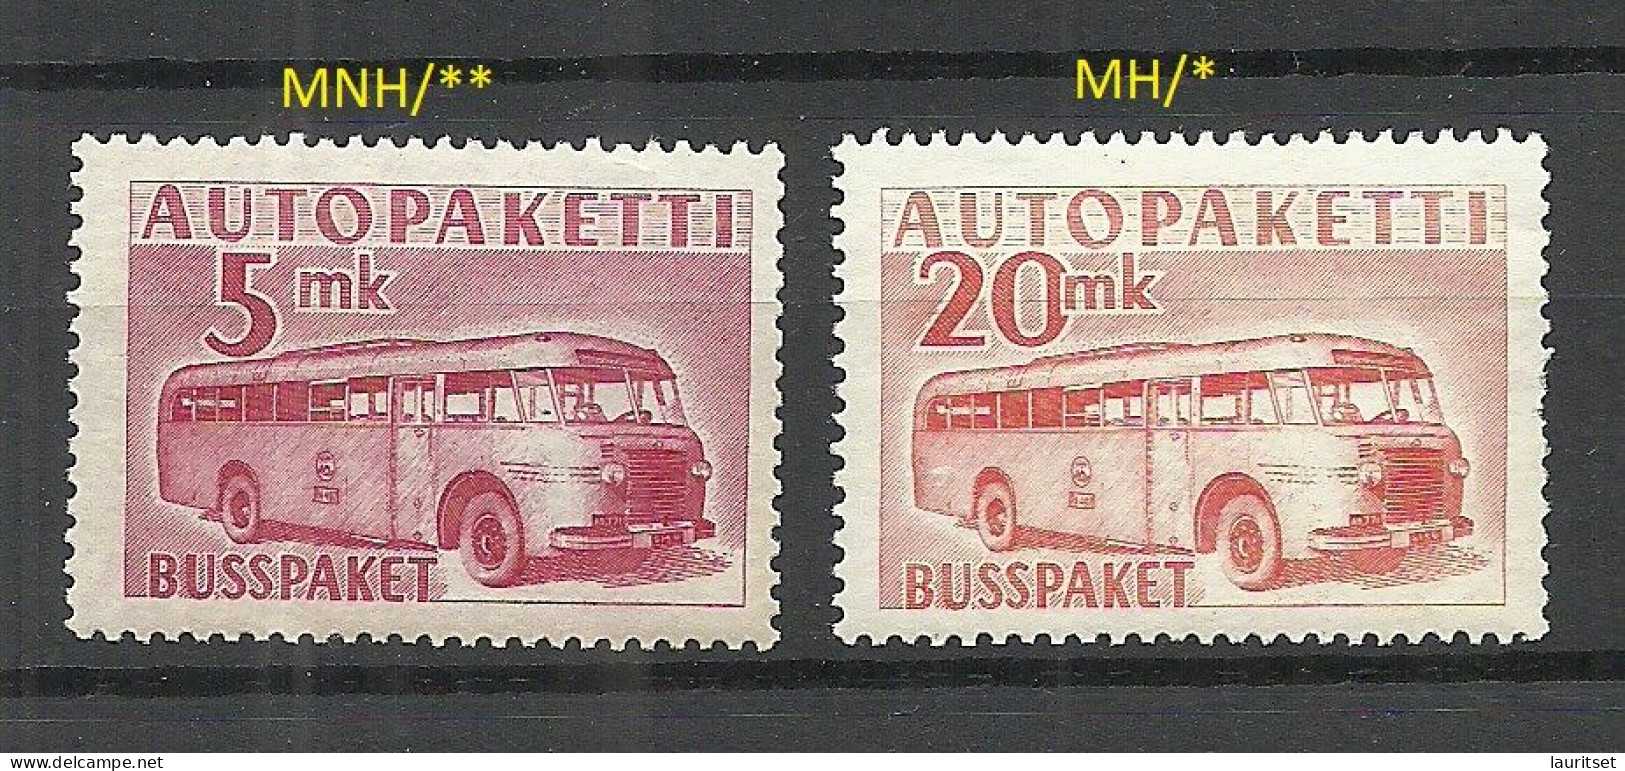 FINLAND FINNLAND 1955/1958 Auto-Paketmarken O Bus Omnibus Packet Stamps Michel 6 - 7 MNH/MH - Postpaketten